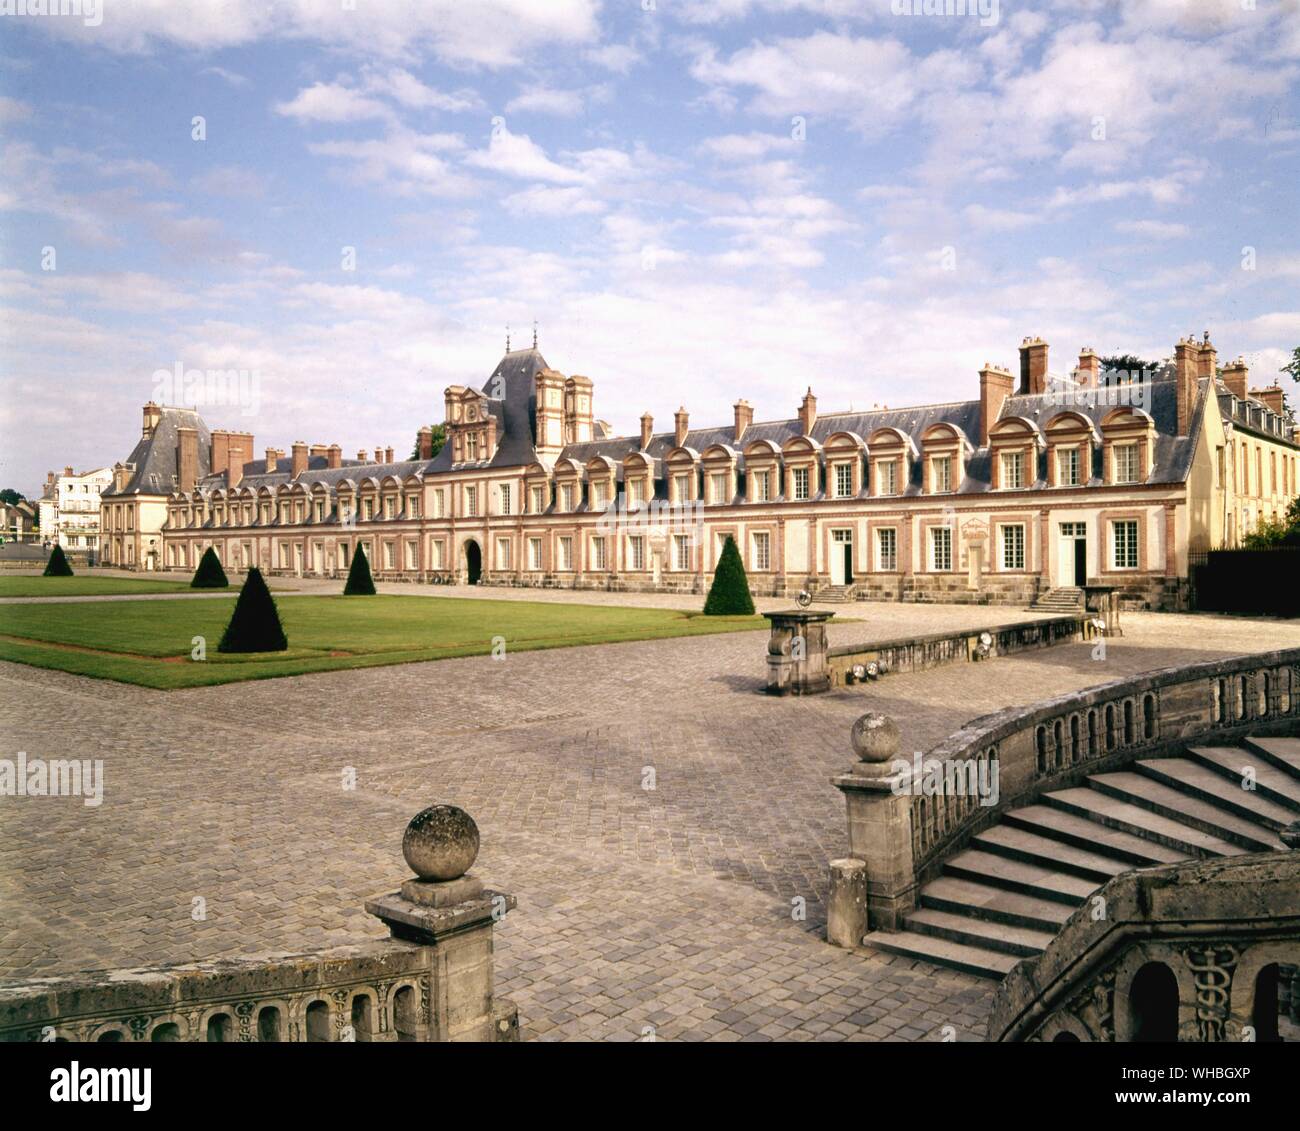 Filming and Photo Shoots - Château de Fontainebleau